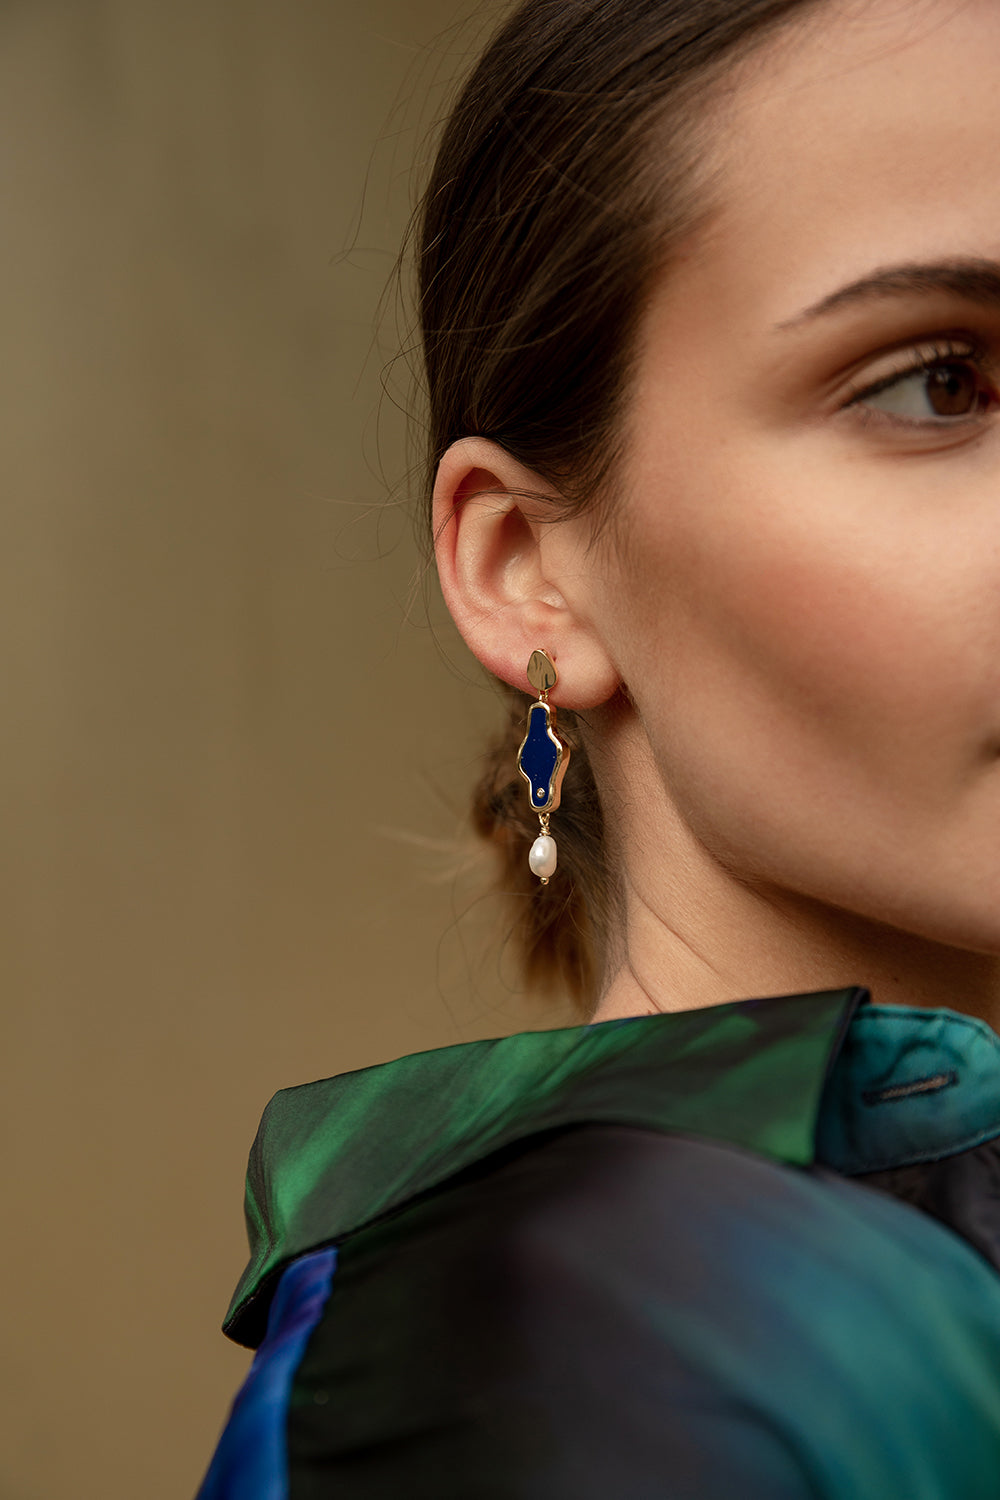 Earrings - Long natural stone earrings with multiform design